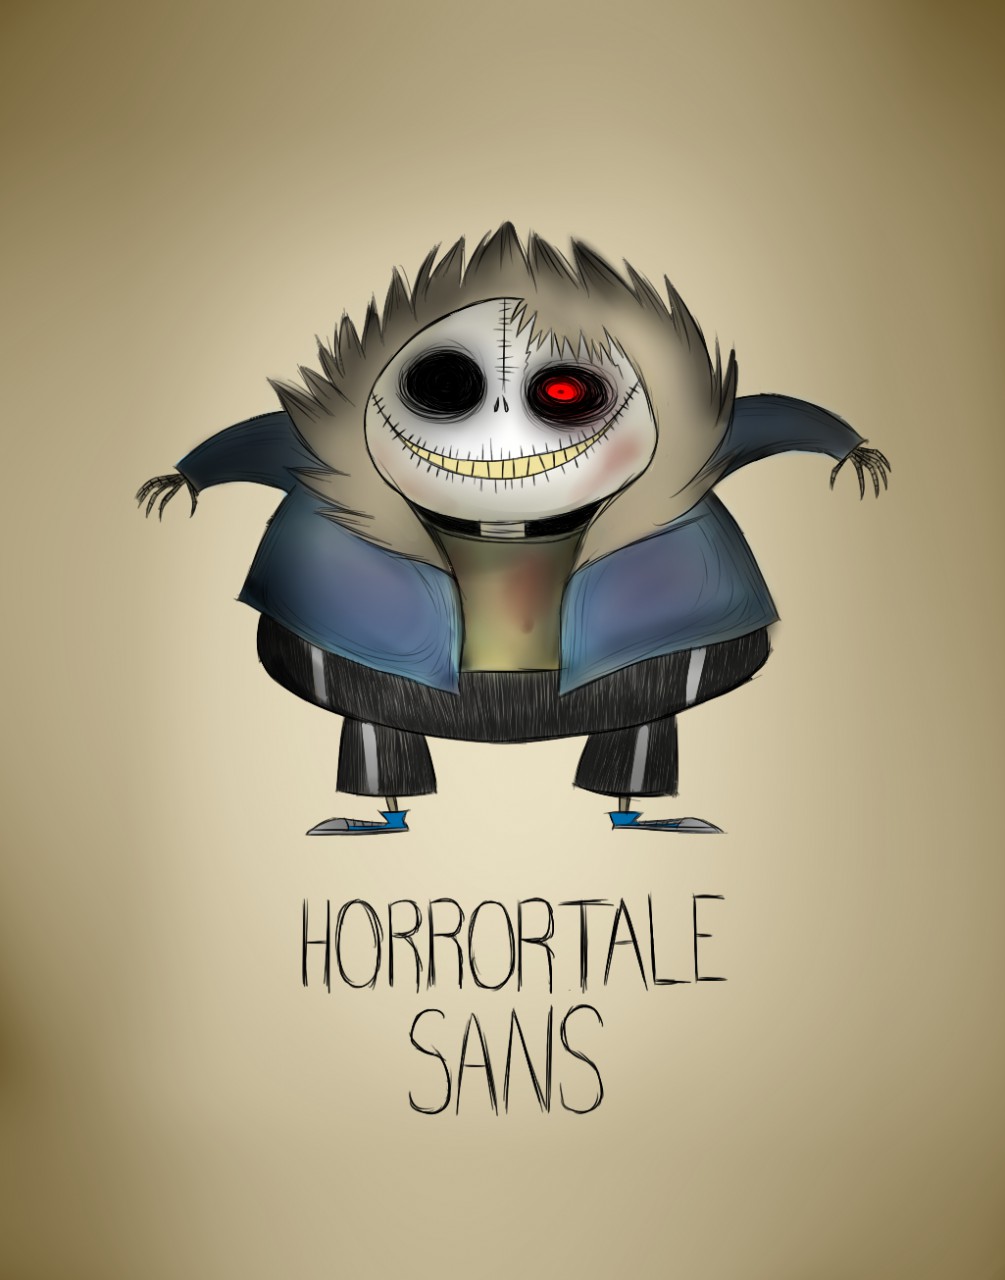 Horrortale Sans - Horrortale Sans added a new photo.